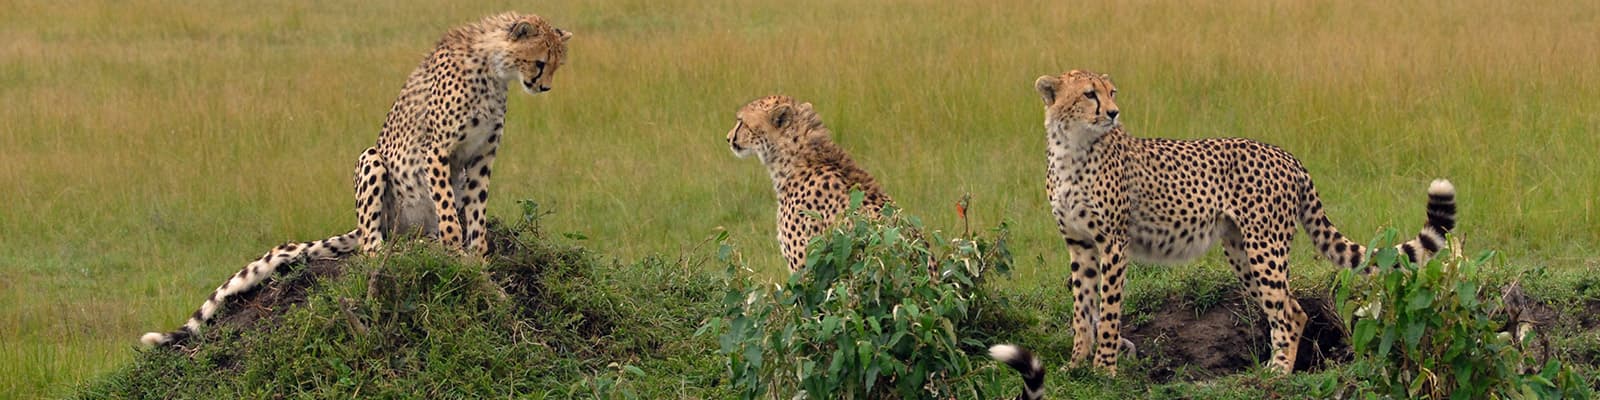 Three cheetahs standing in long grass